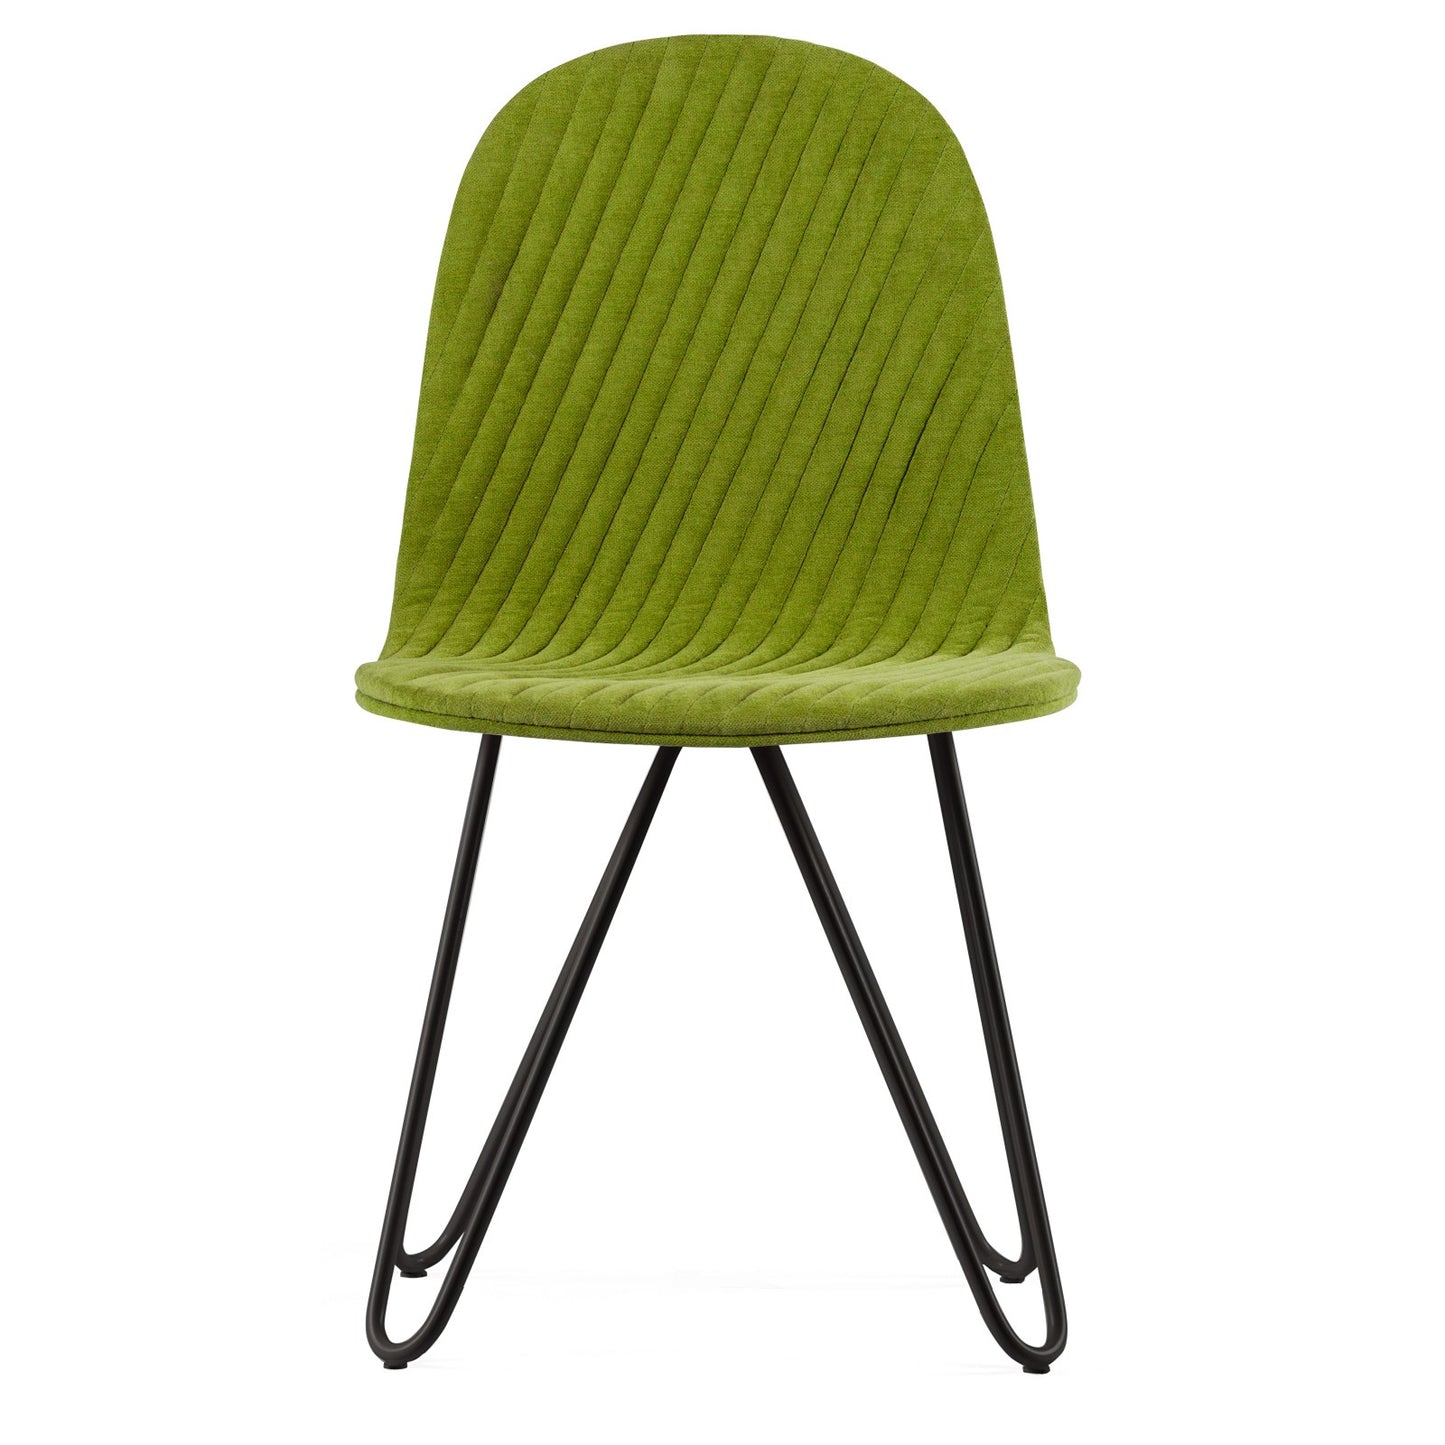 Chair Mannequin 03 - Green